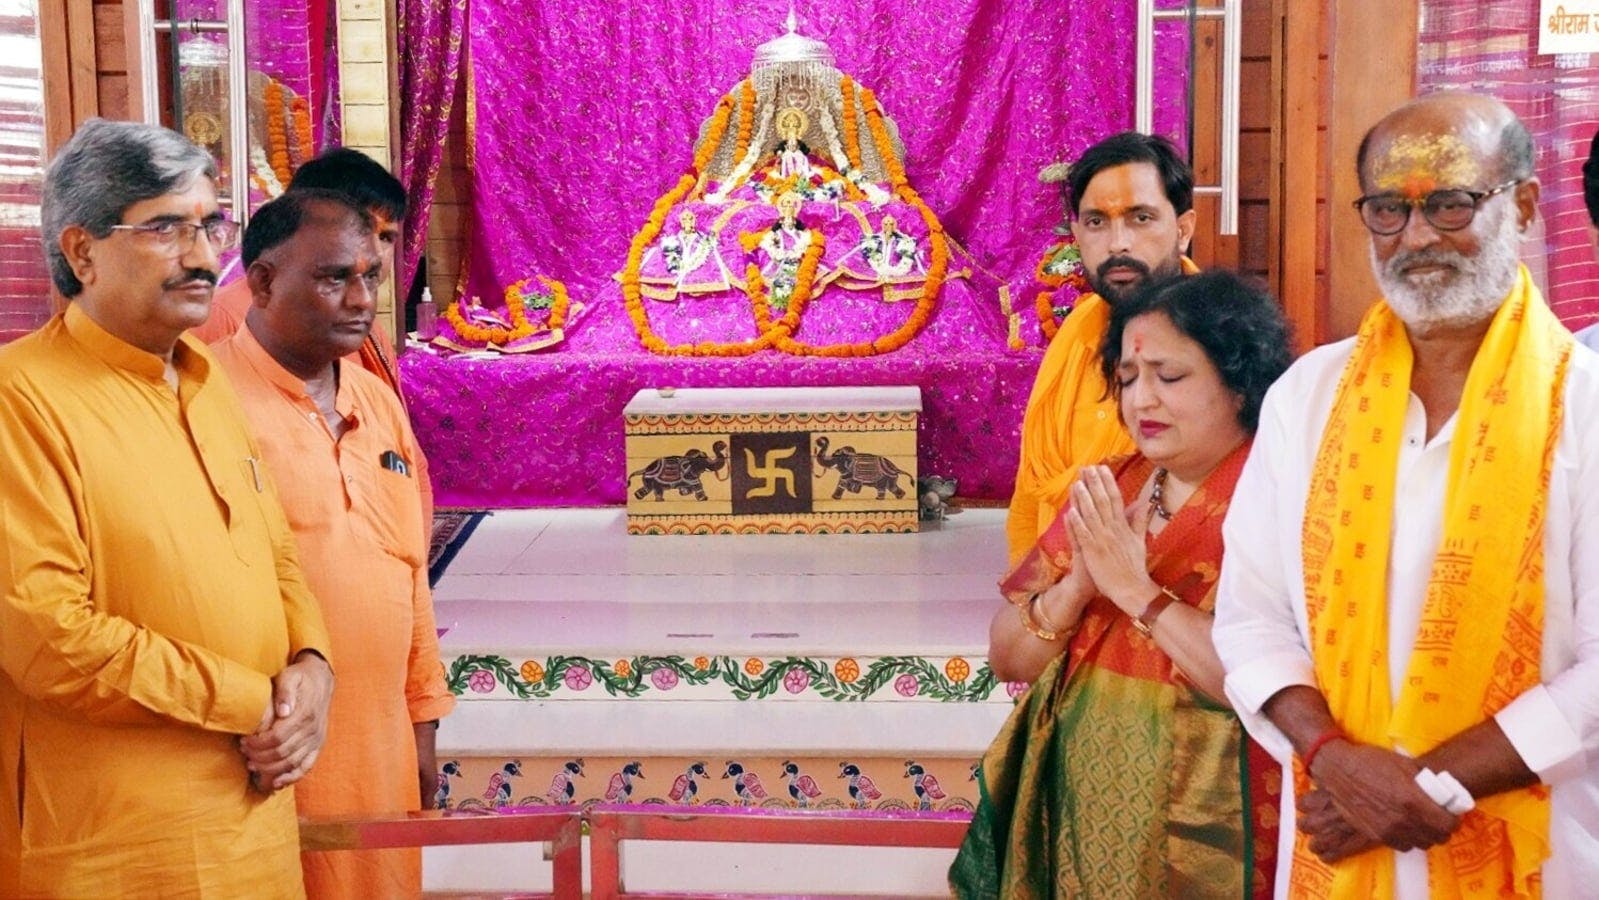 Rajinikanth visits Ram Janmabhoomi, Hanuman Garhi in Ayodhya with wife Latha after meeting Akhilesh Yadav in Lucknow